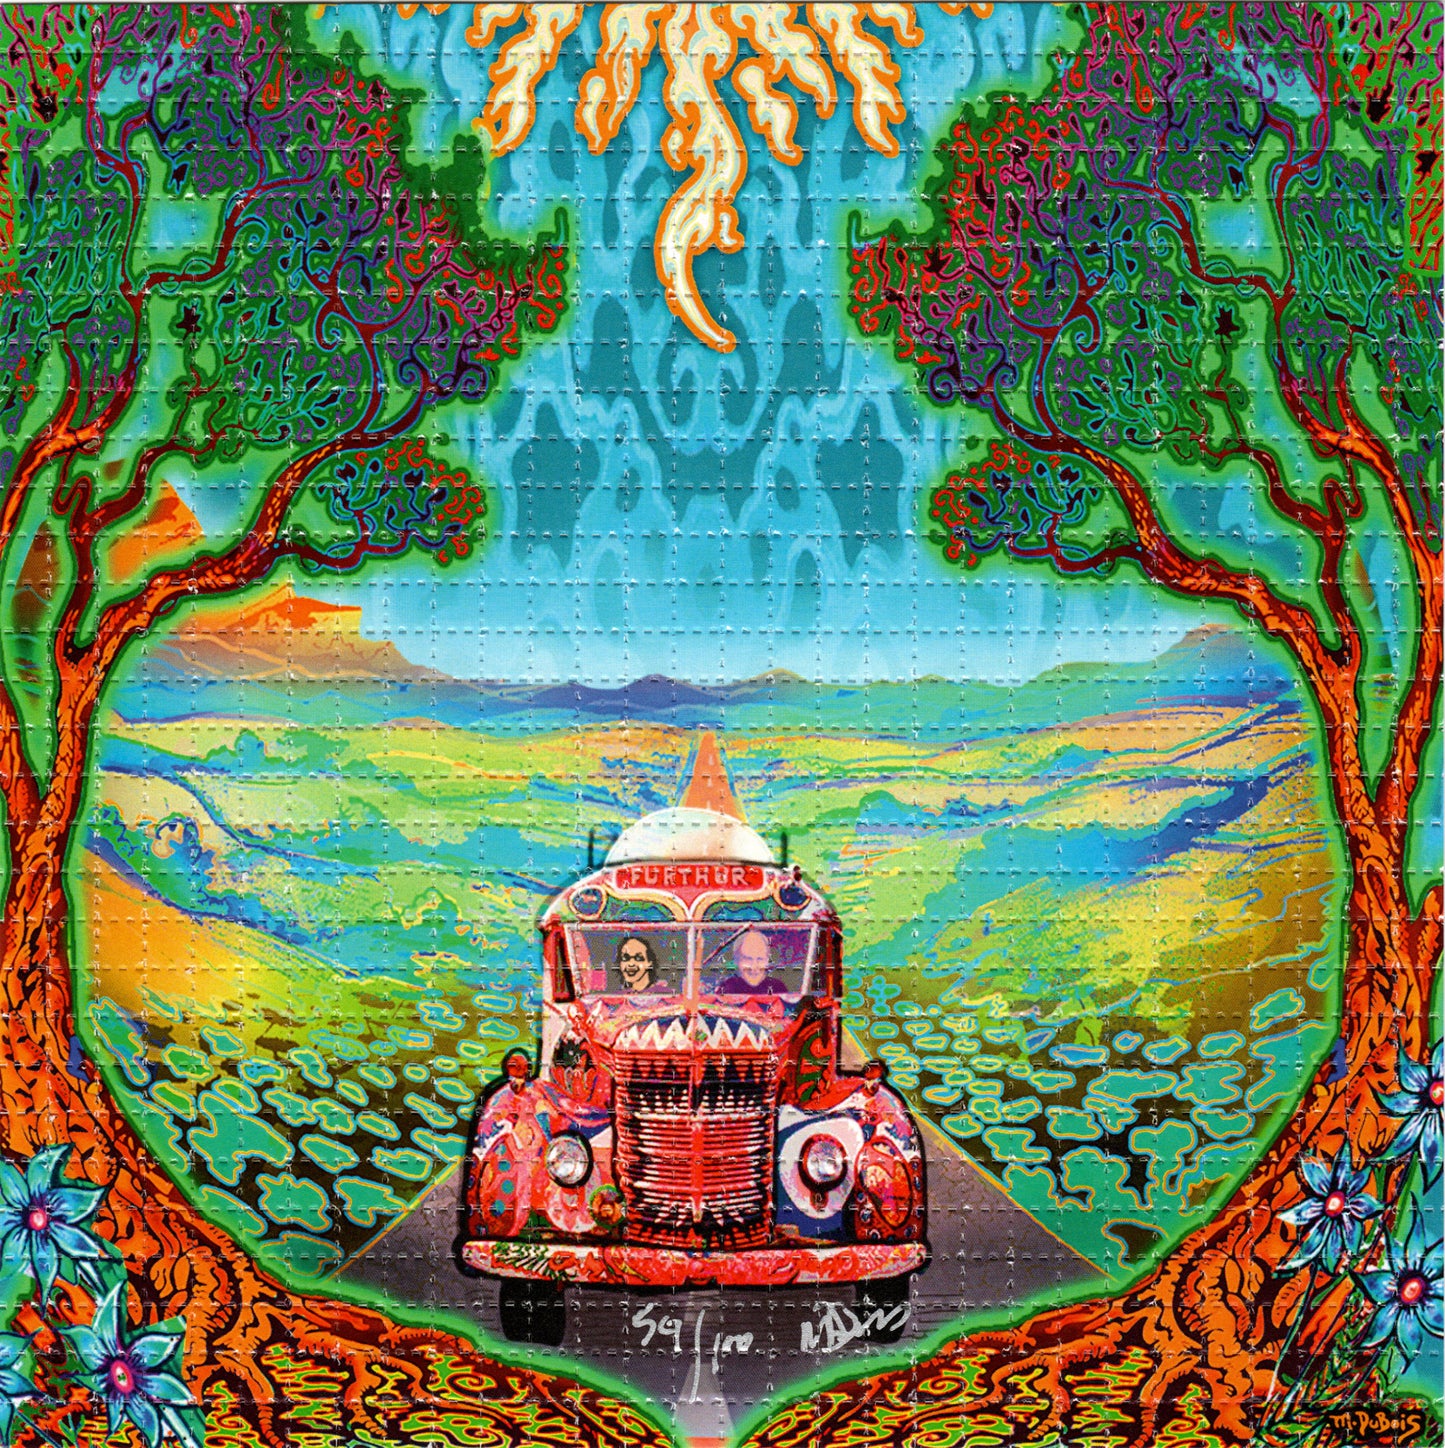 Going Furthur  by MIKE DUBOIS Limited Edition LSD blotter art print